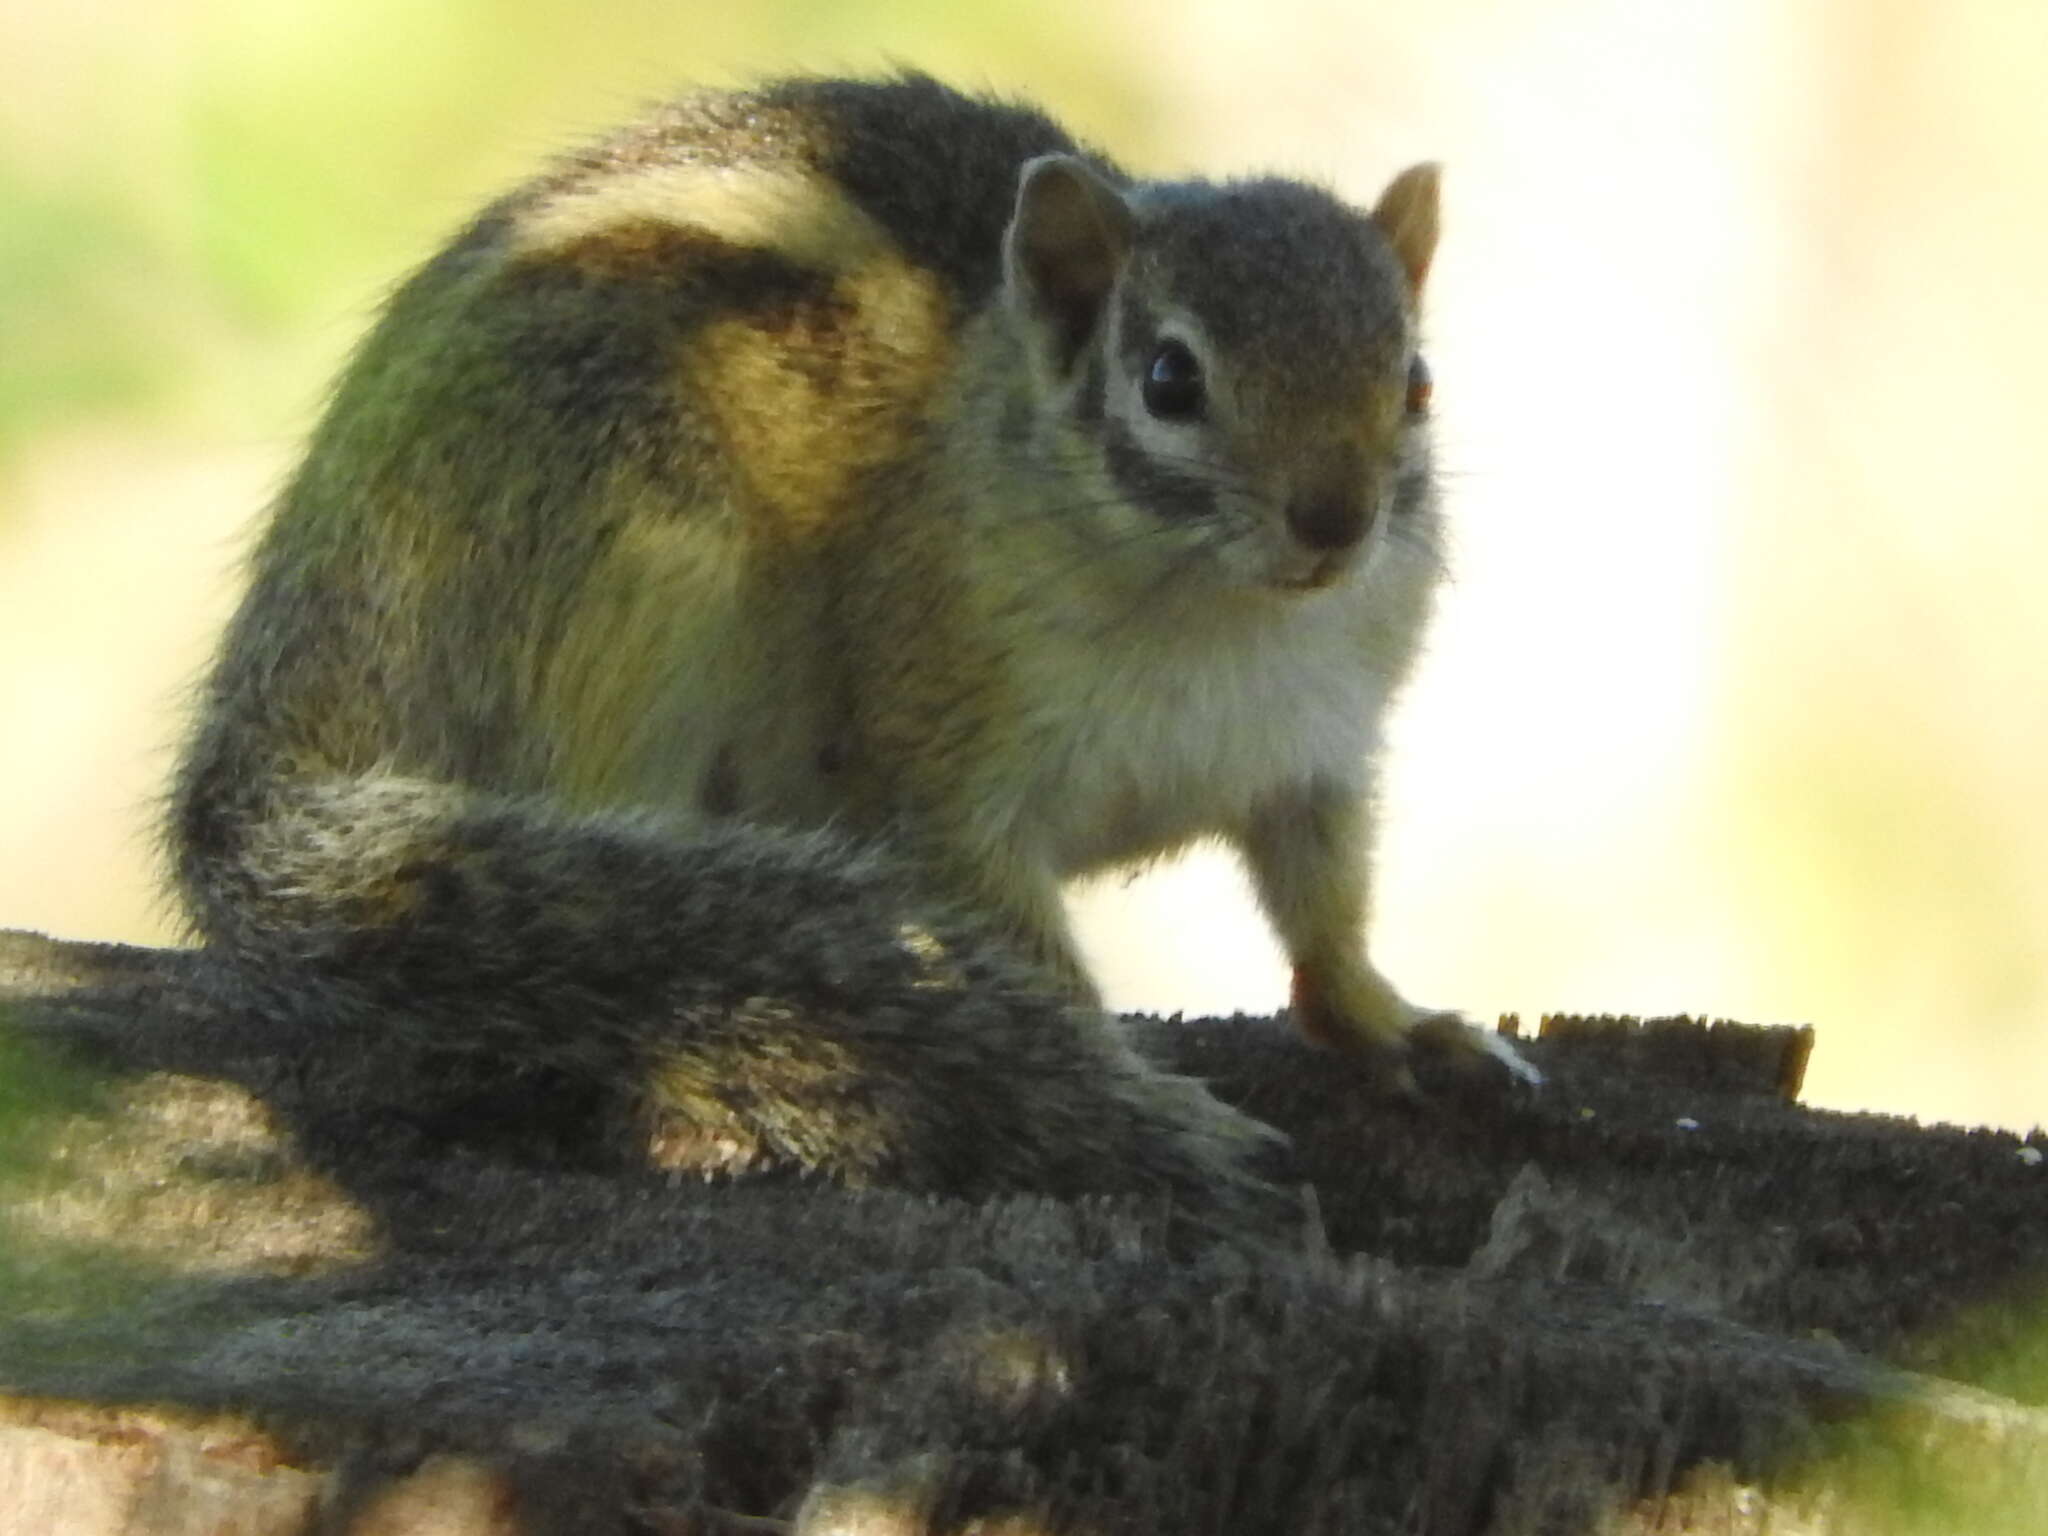 Image of Striped Bush Squirrel